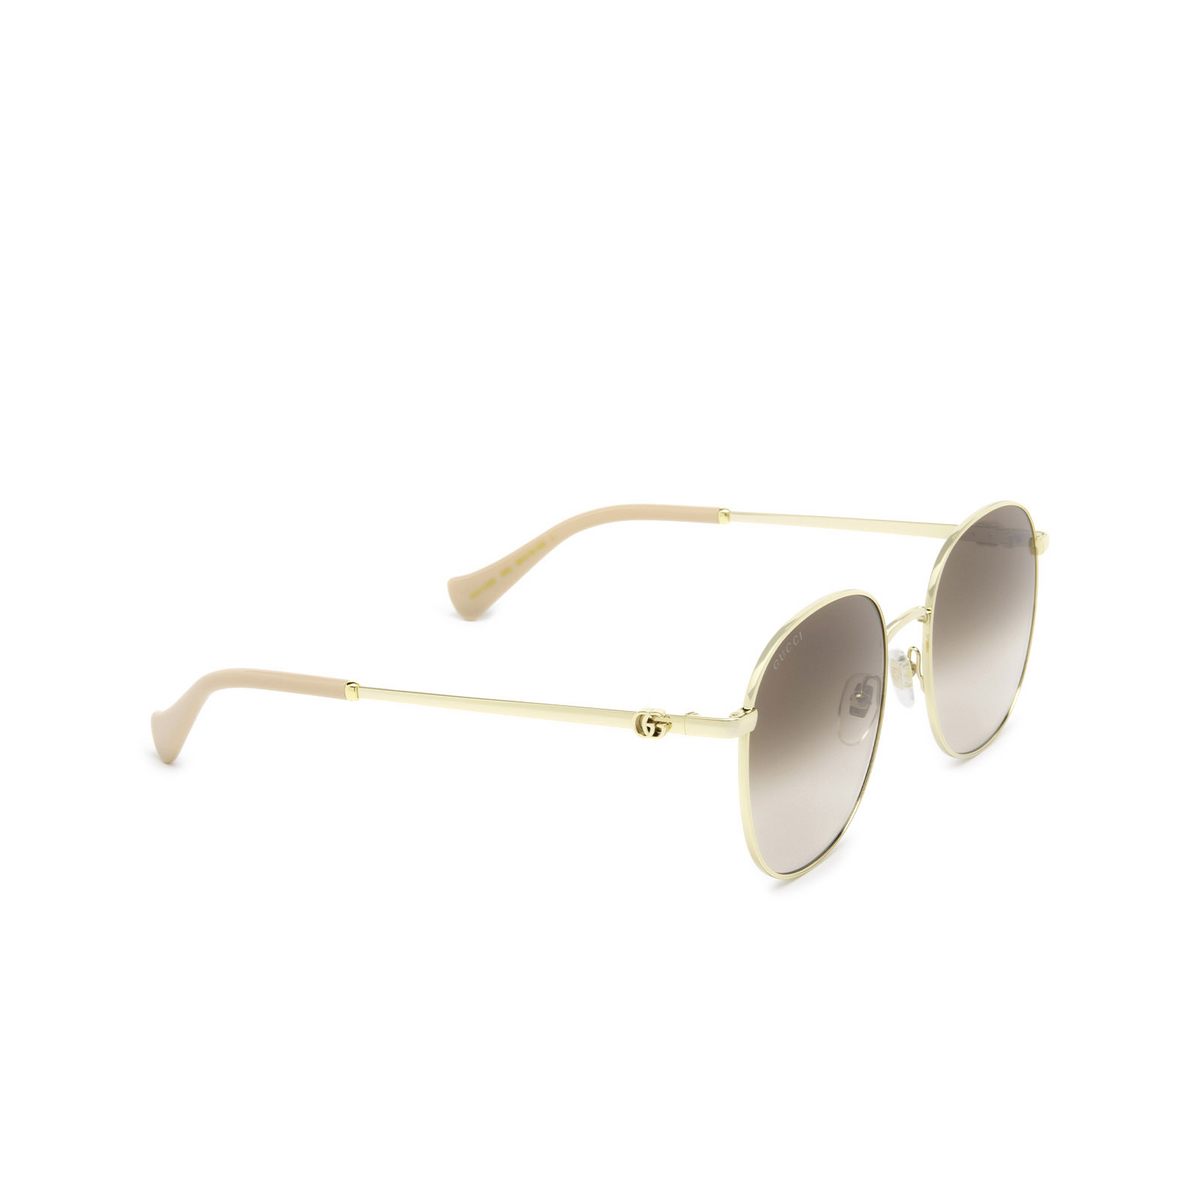 Gucci® Round Sunglasses: GG1142S color Gold 002 - three-quarters view.